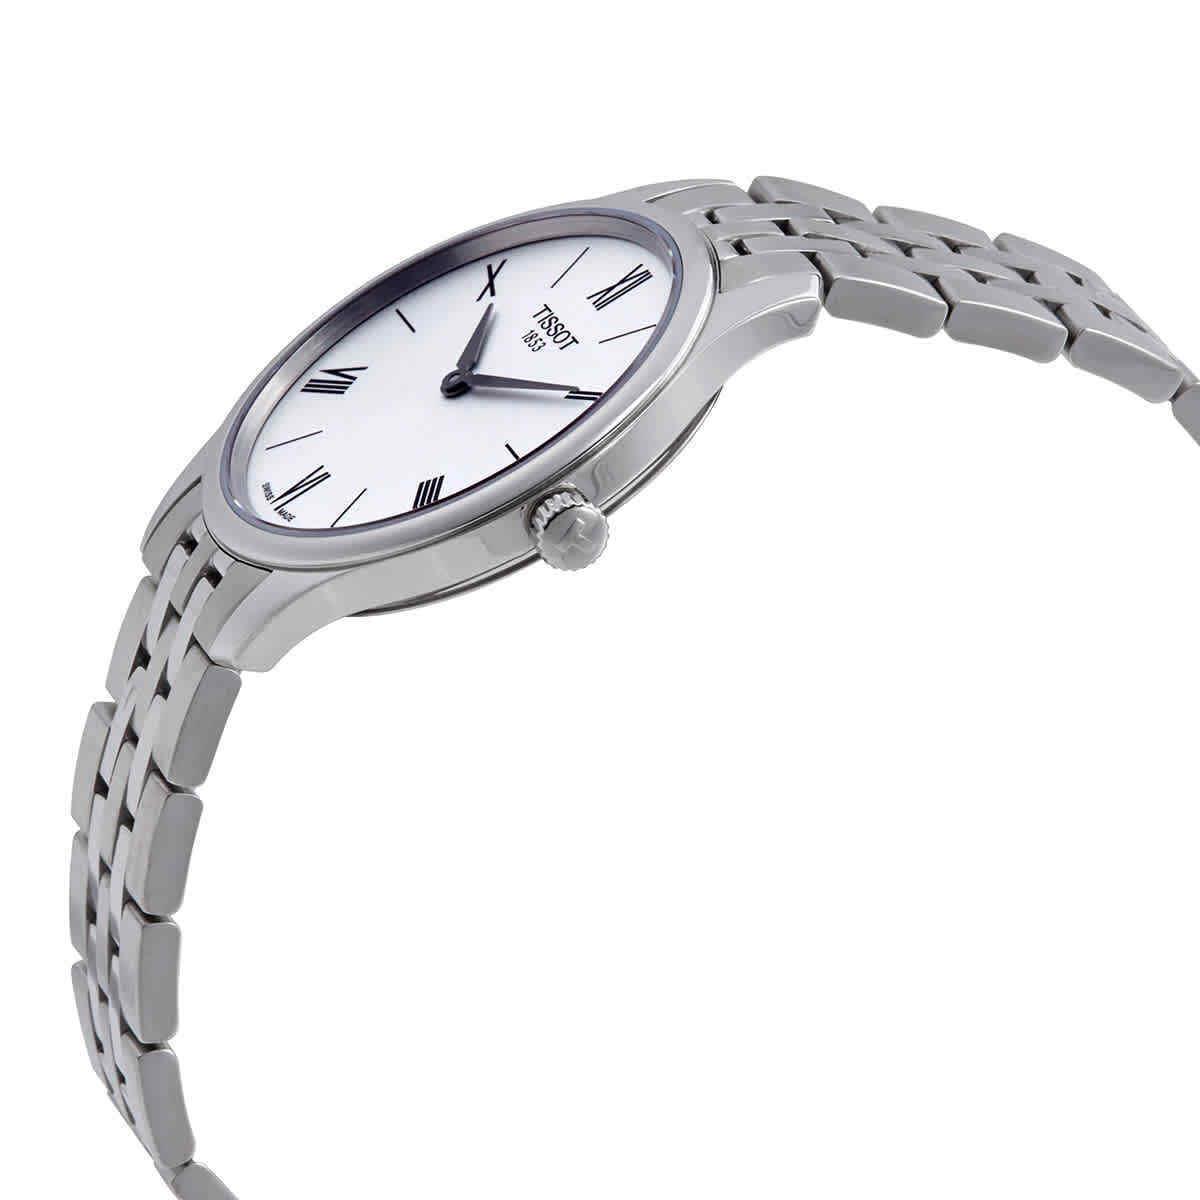 Tissot Tradition 5.5 Quartz Silver Dial Ladies Watch T063.209.11.038.00 - Dial: Silver, Band: Silver, Bezel: Silver